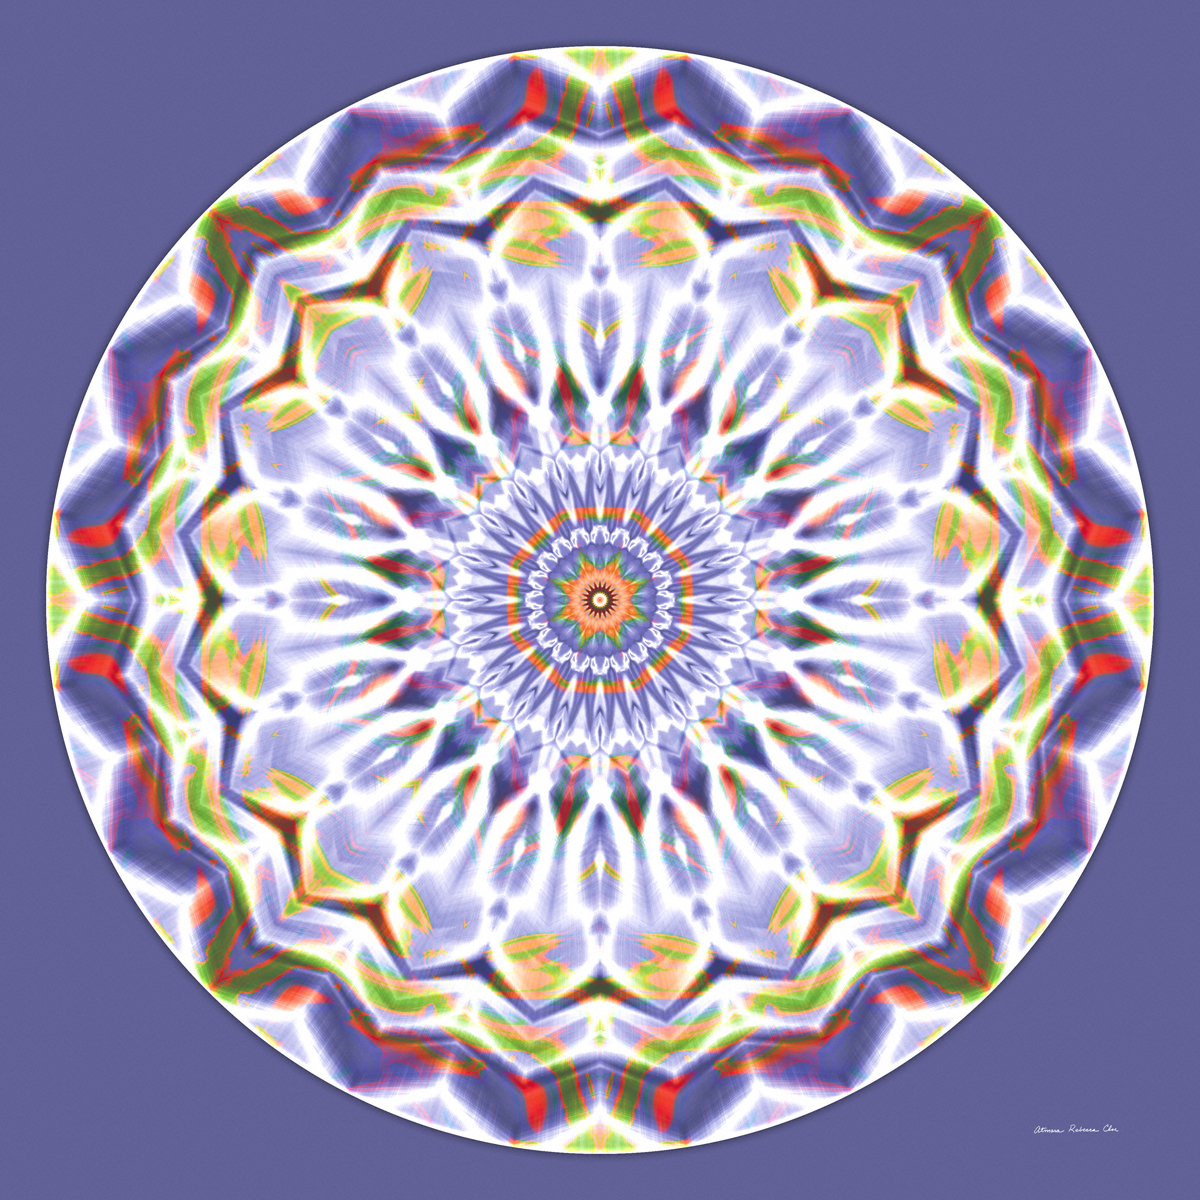 Mandalas Of Healing And Awakening 7 - Artwork By Atmara tout Mandalas 